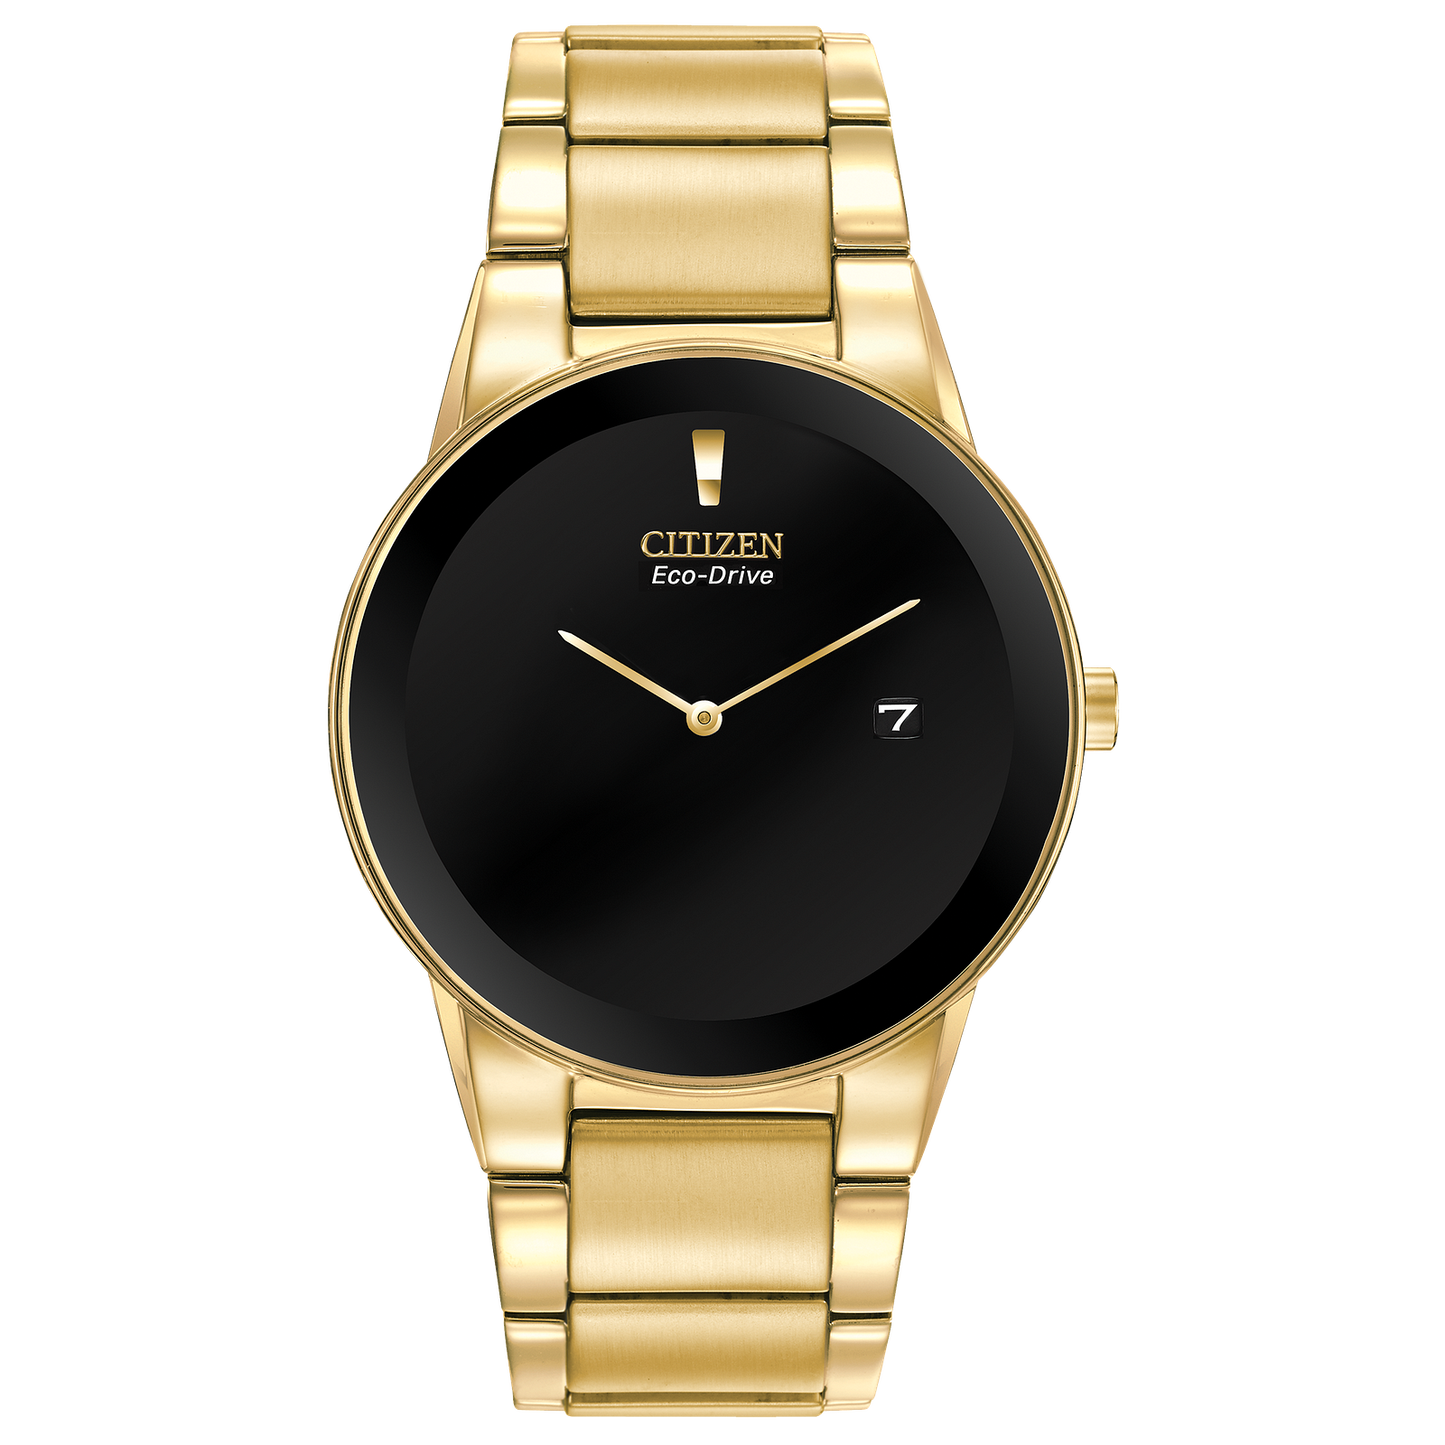 Axiom - "Citizen" Men's Watch - Gold Edition